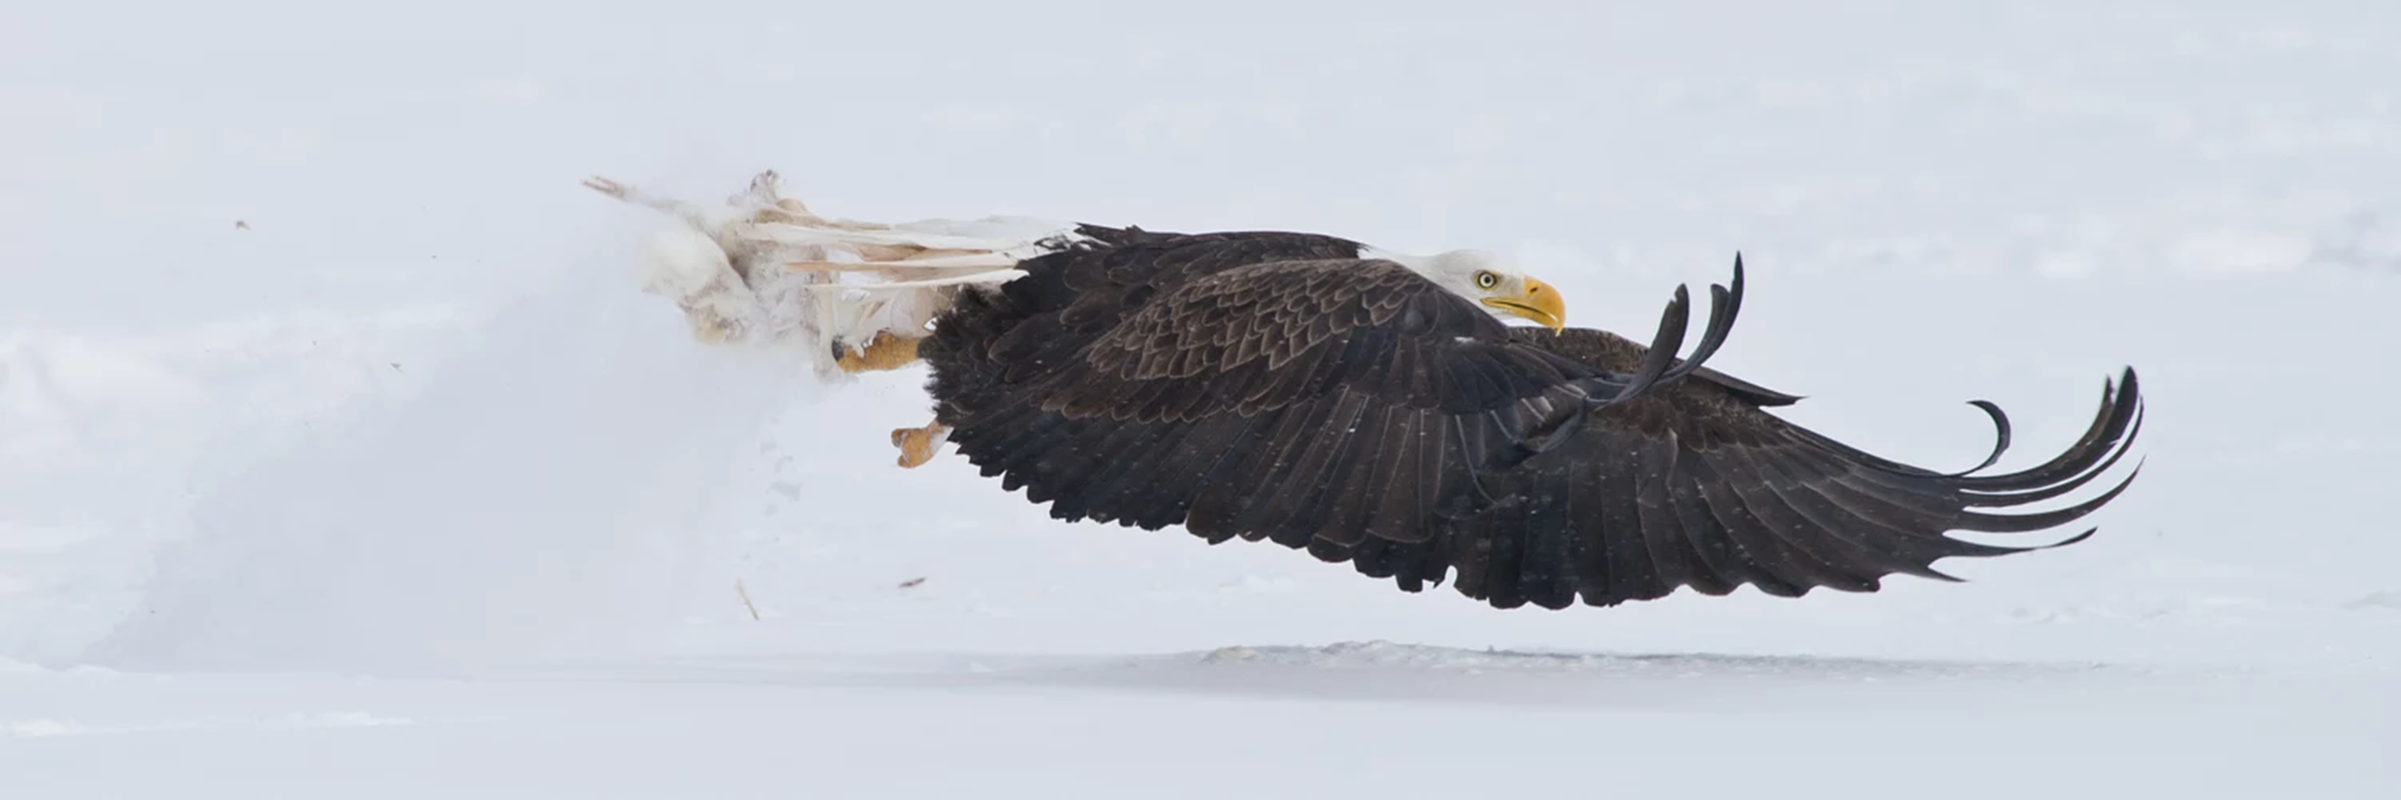 General 2401x800 eagle bald eagle flying animals birds profile nature wildlife snow